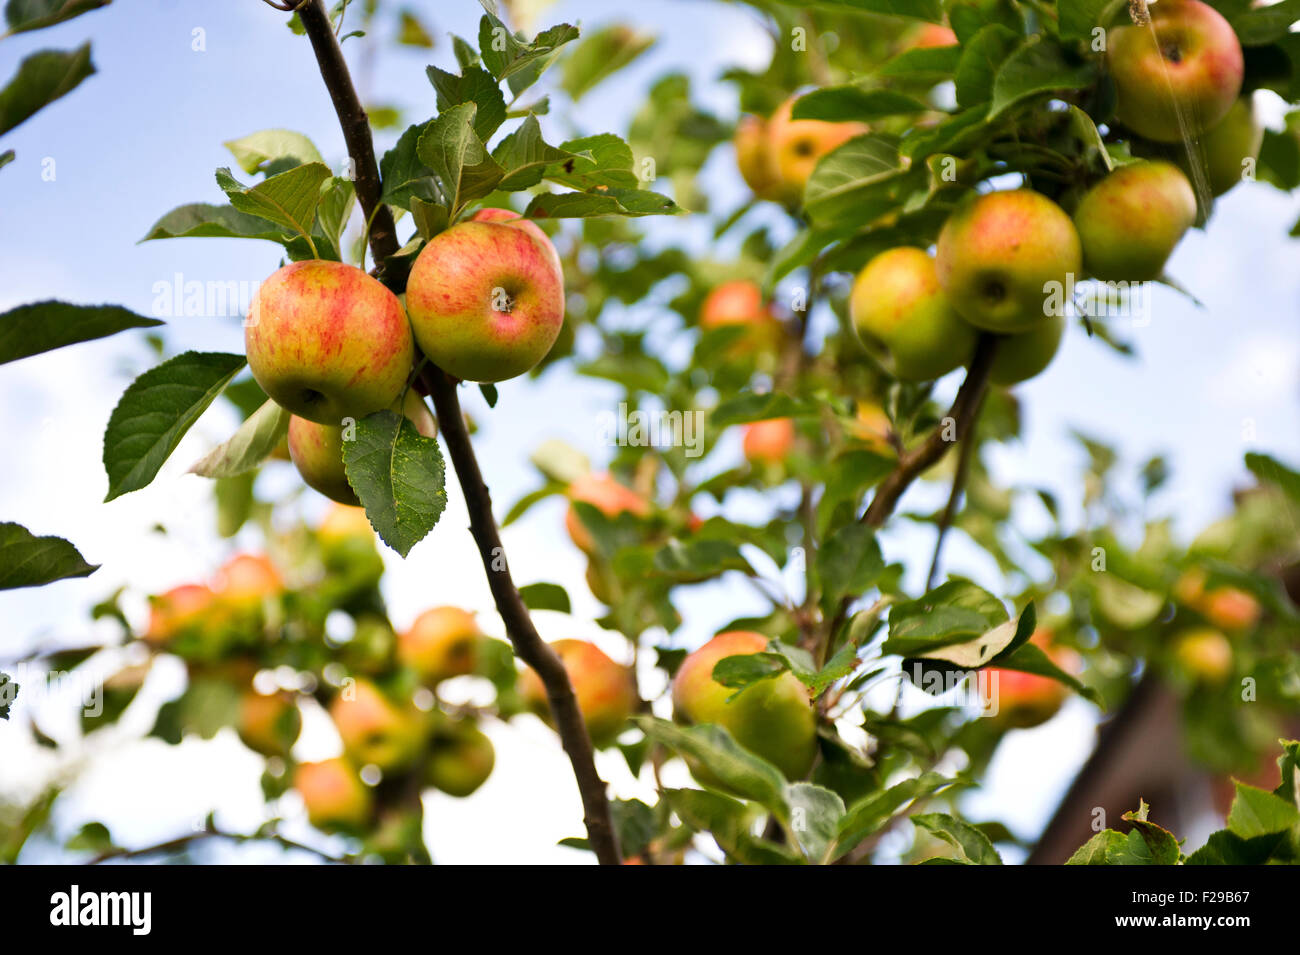 Laxton's Superb apples on family apple tree Stock Photo